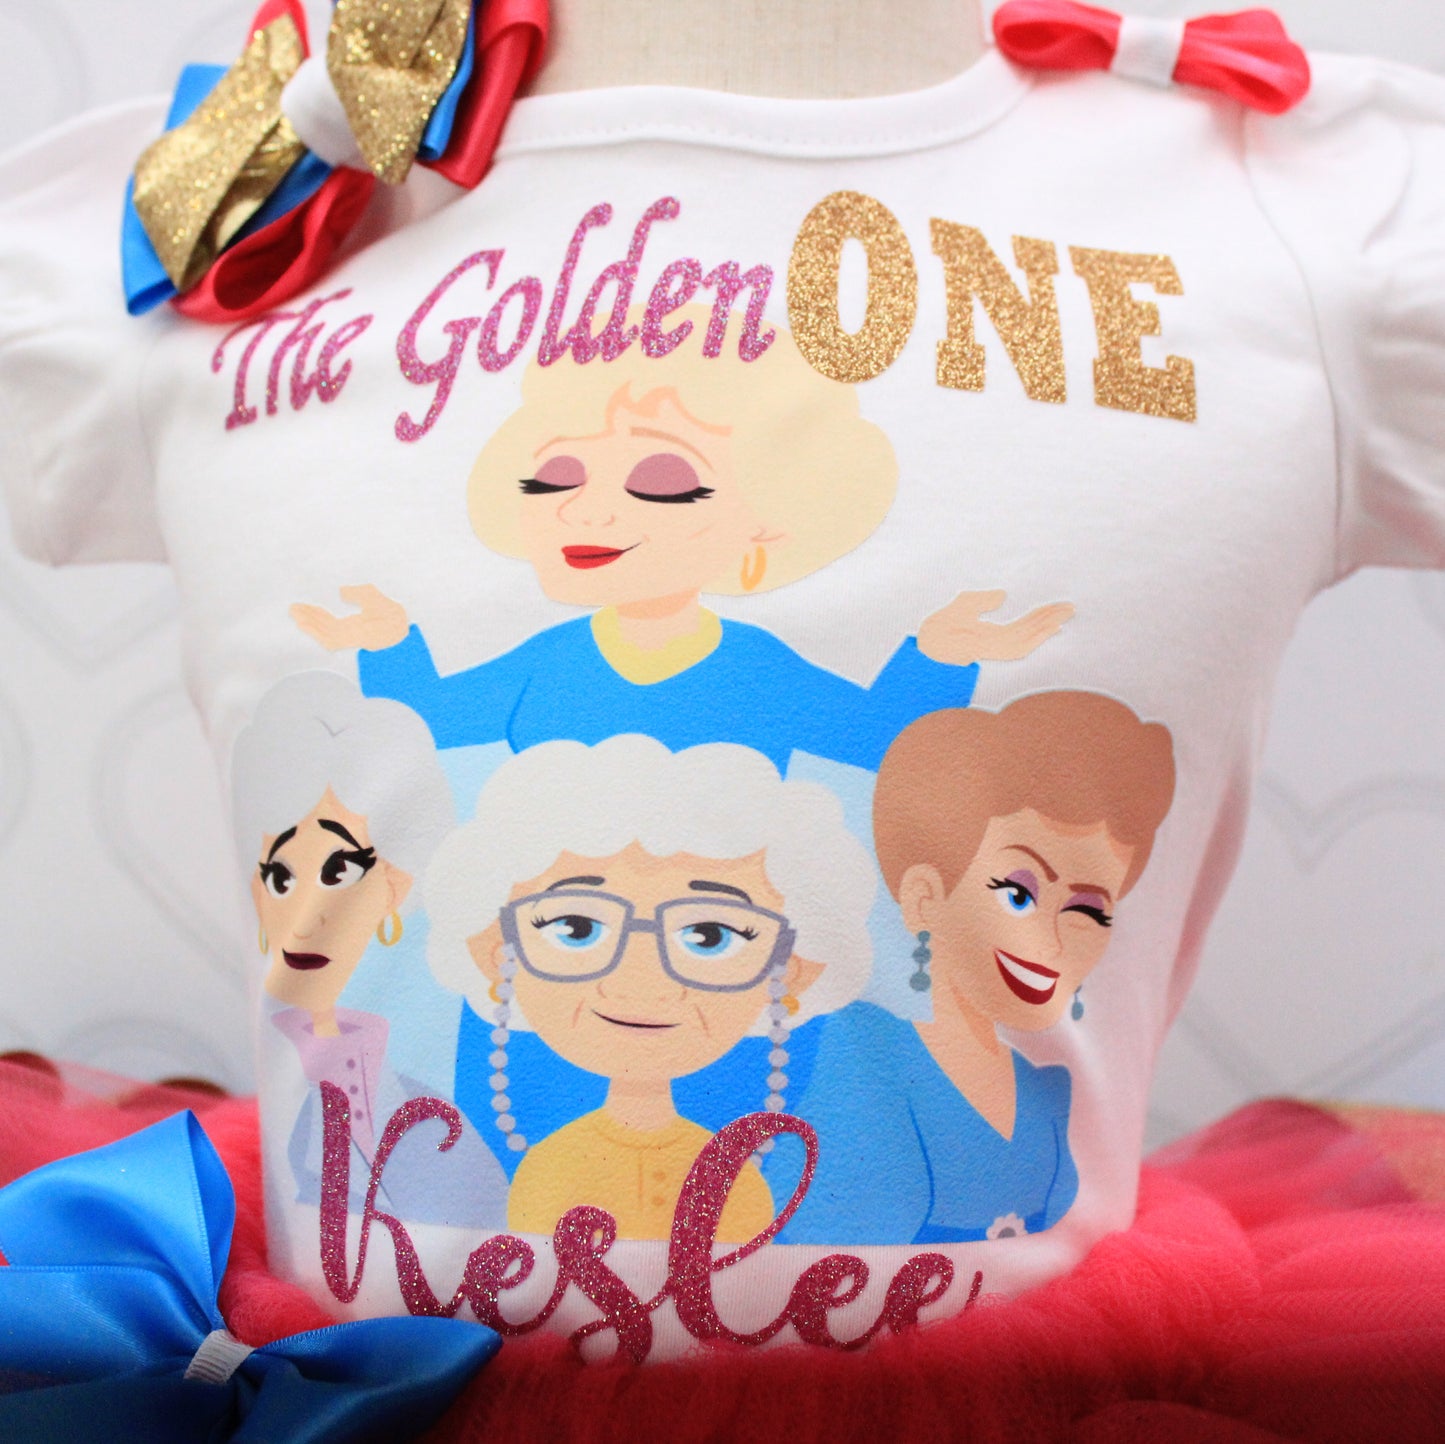 Golden girls tutu set- Golden girls tutu set- Golden girls outfit-Golden girls ribbon trim set- The golden one birthday